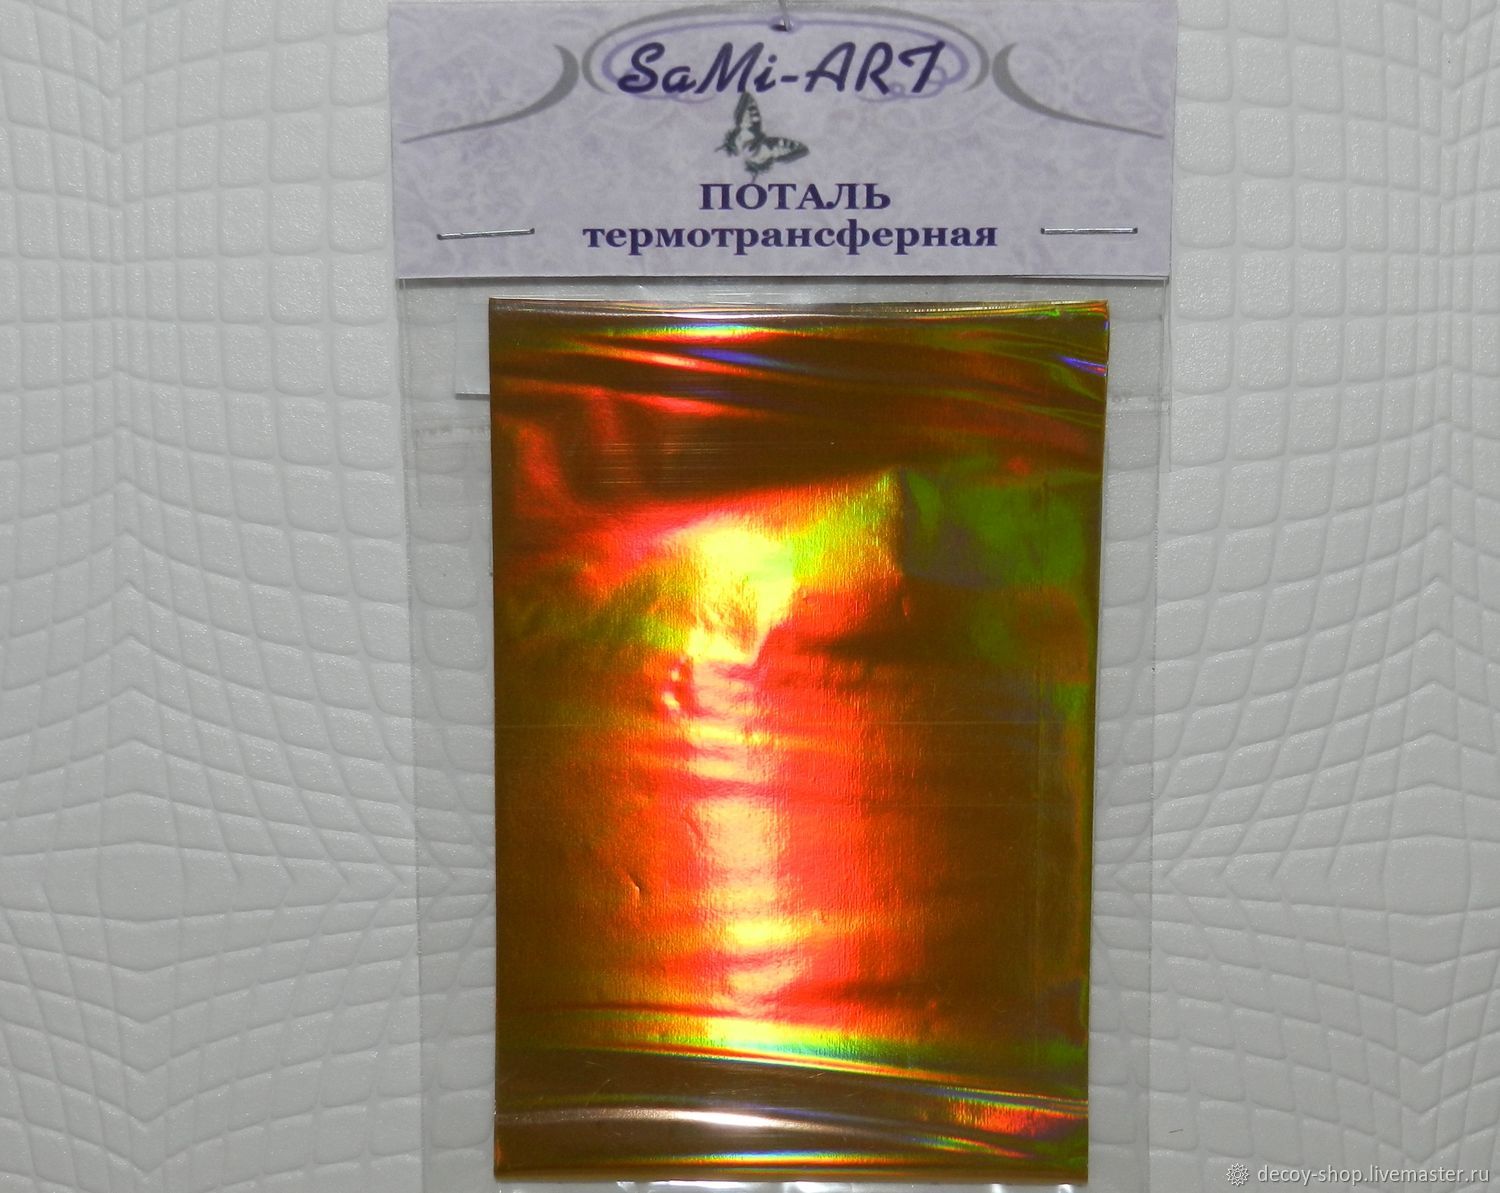 Potal ' thermal transfer `Gold holographic`, 1 m x 8cm. 60 RUB.
